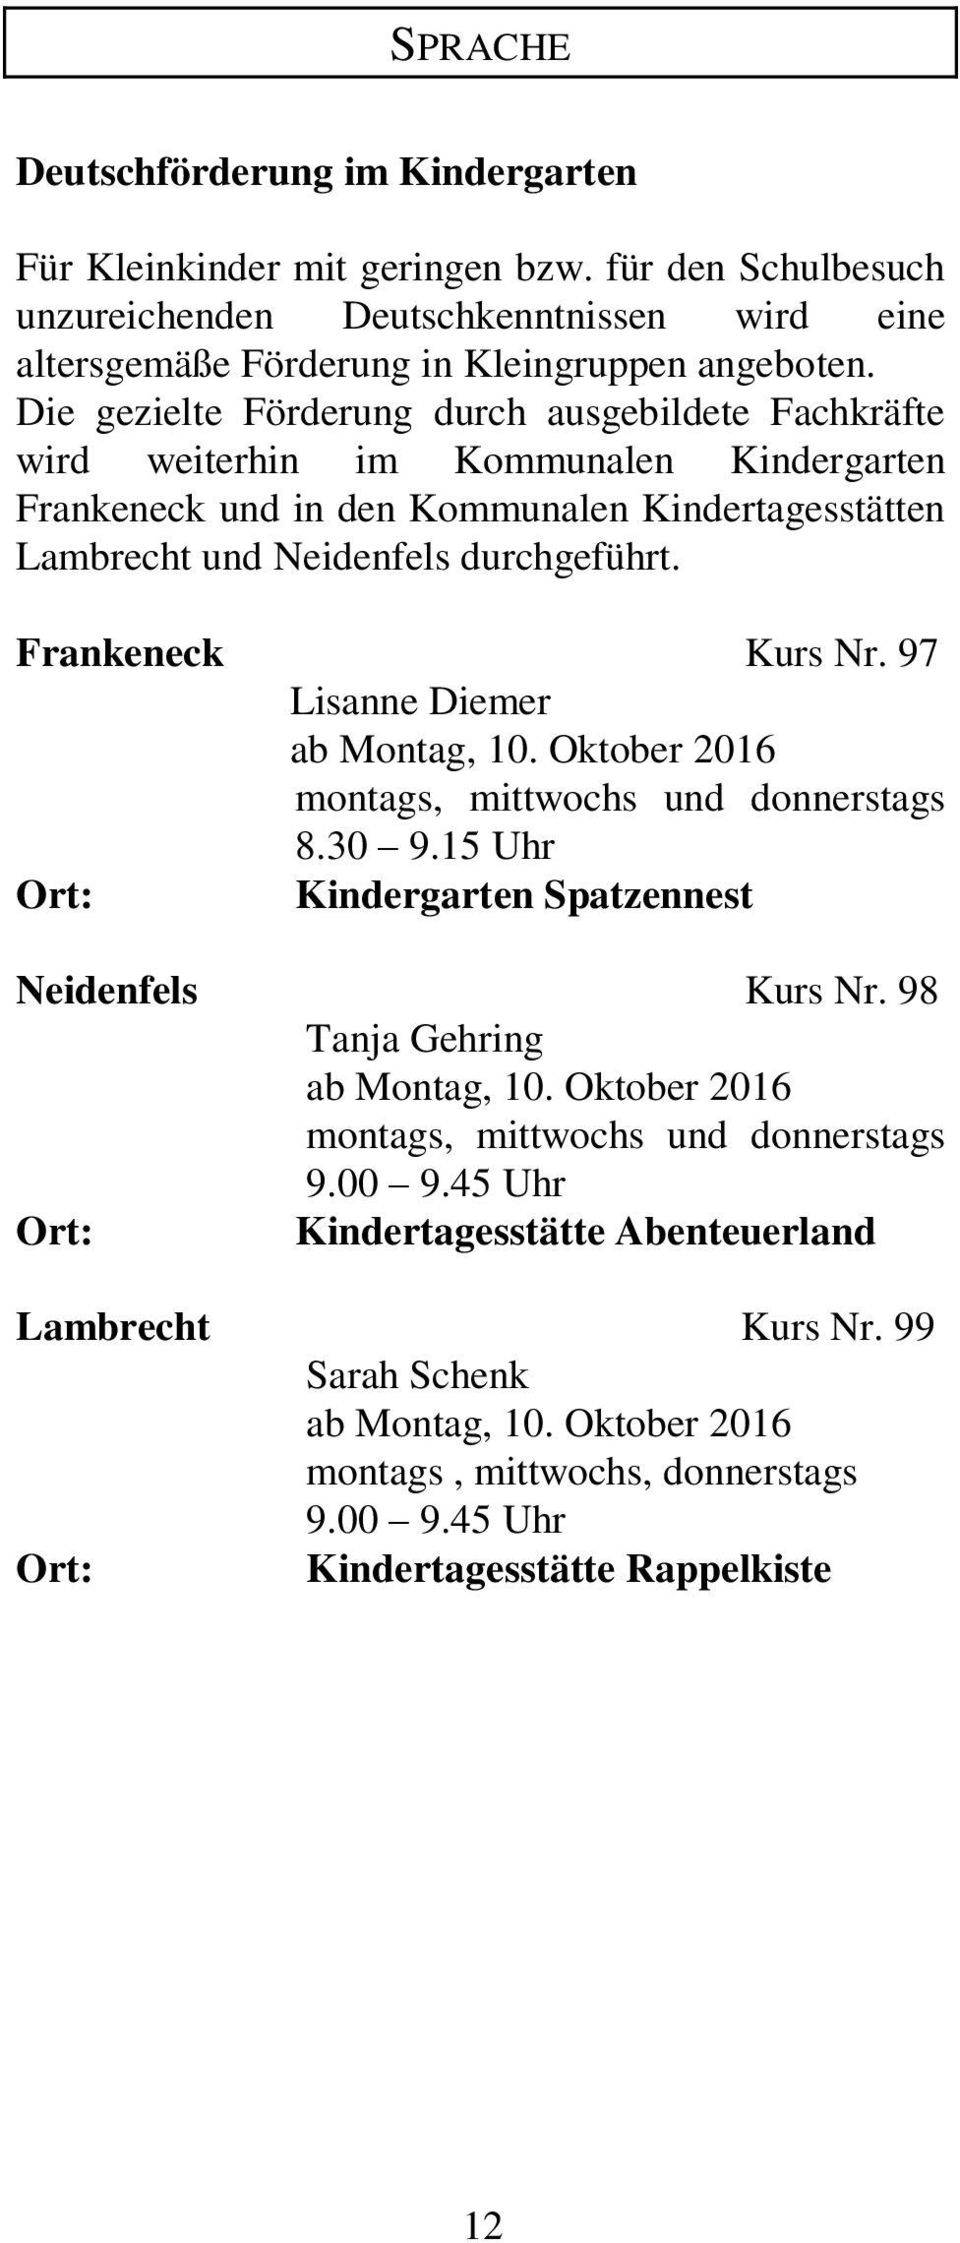 Frankeneck Kurs Nr. 97 Lisanne Diemer ab Montag, 10. Oktober 2016 montags, mittwochs und donnerstags 8.30 9.15 Uhr Kindergarten Spatzennest Neidenfels Kurs Nr. 98 Tanja Gehring ab Montag, 10.